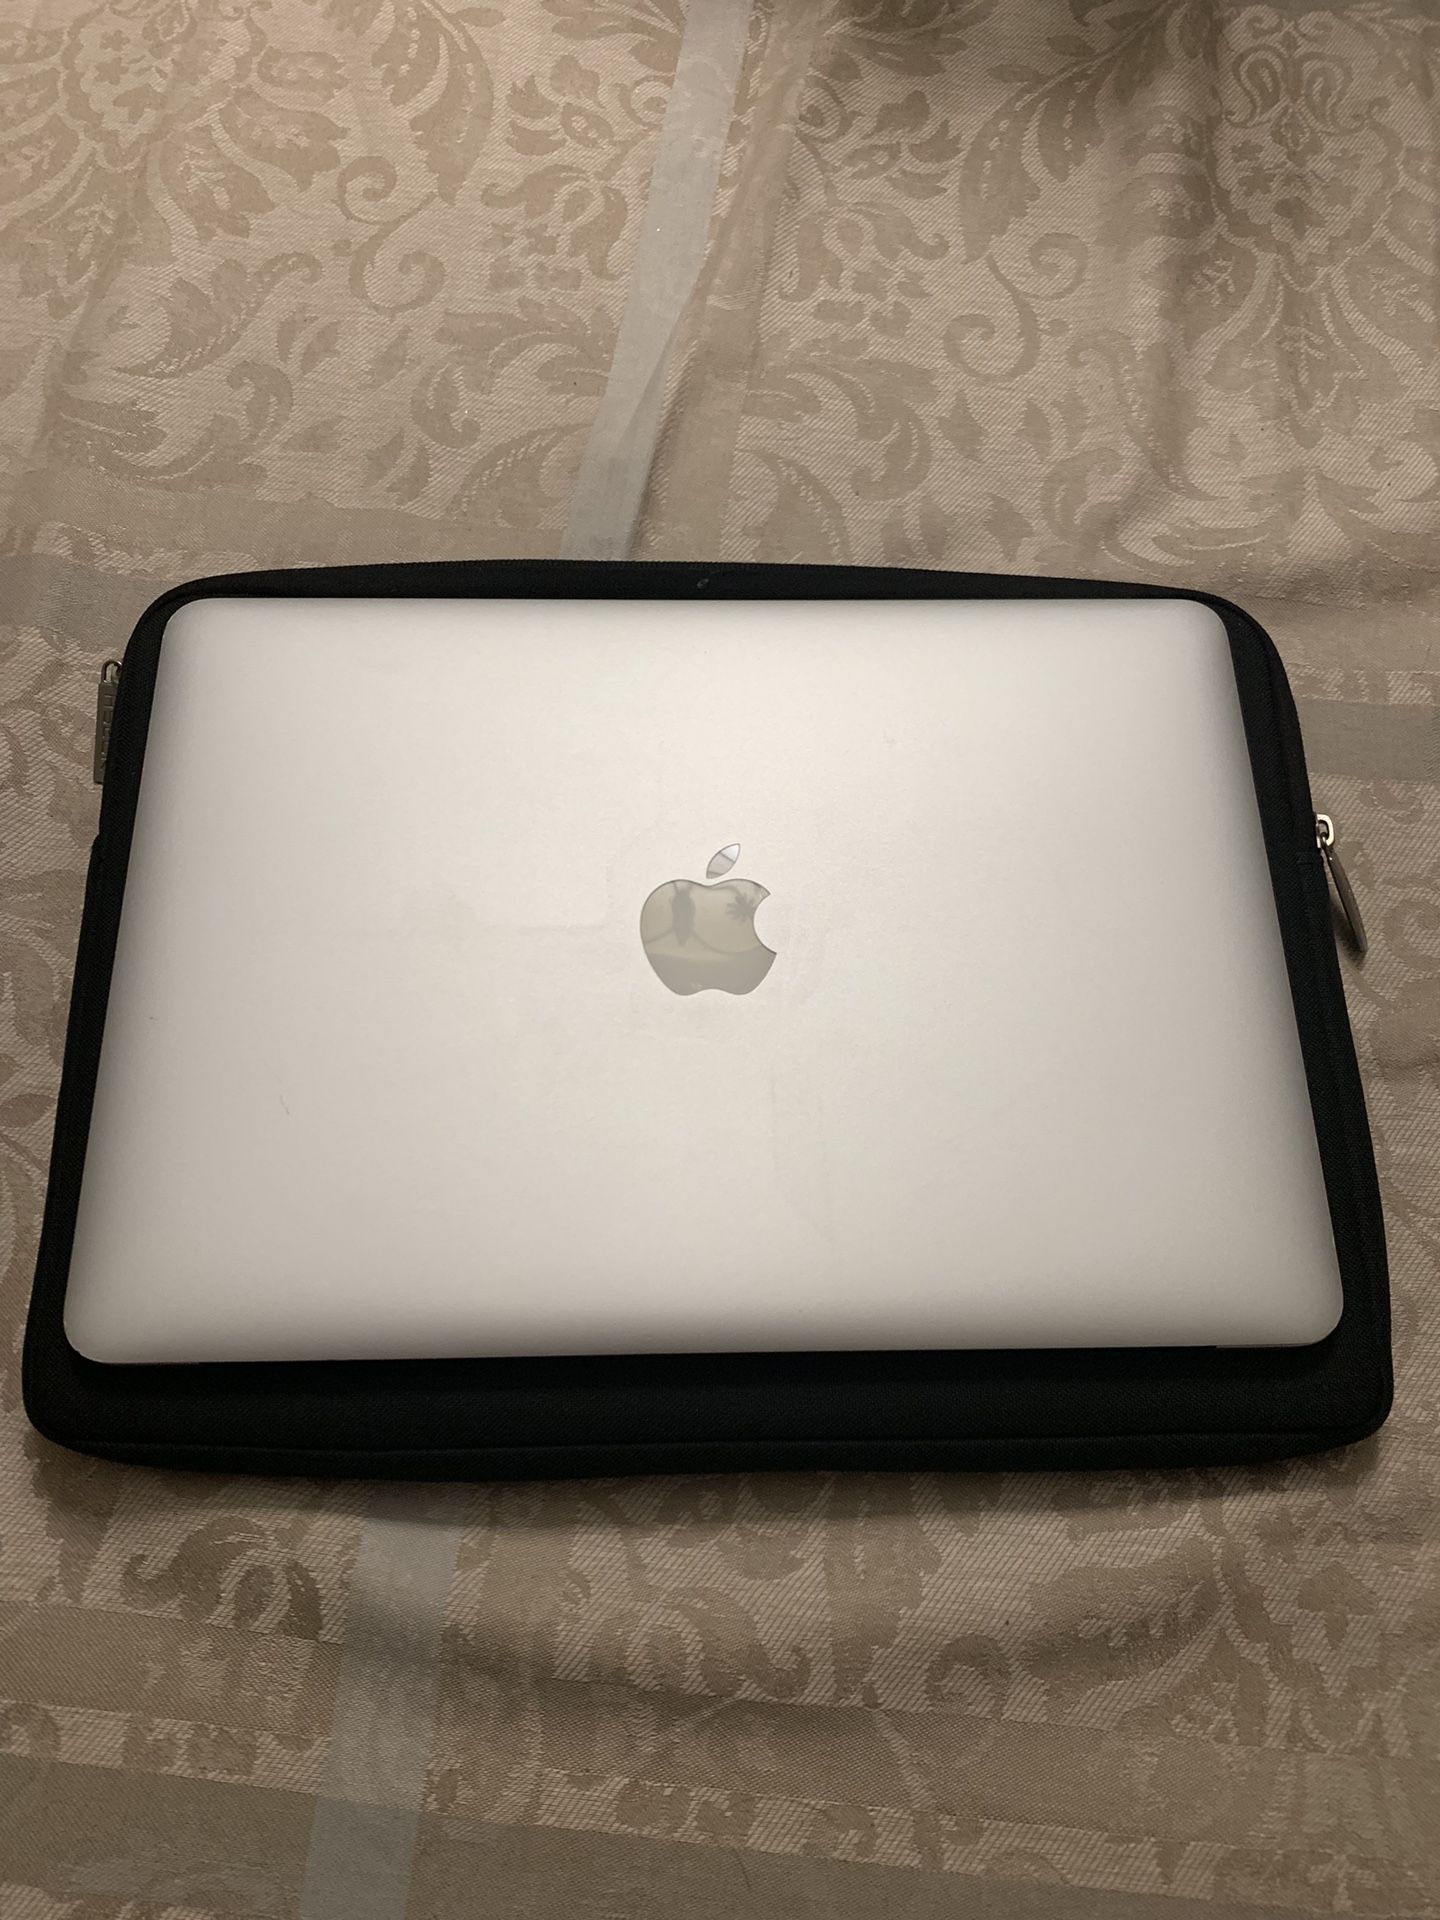 2012 13 inch MacBook Air